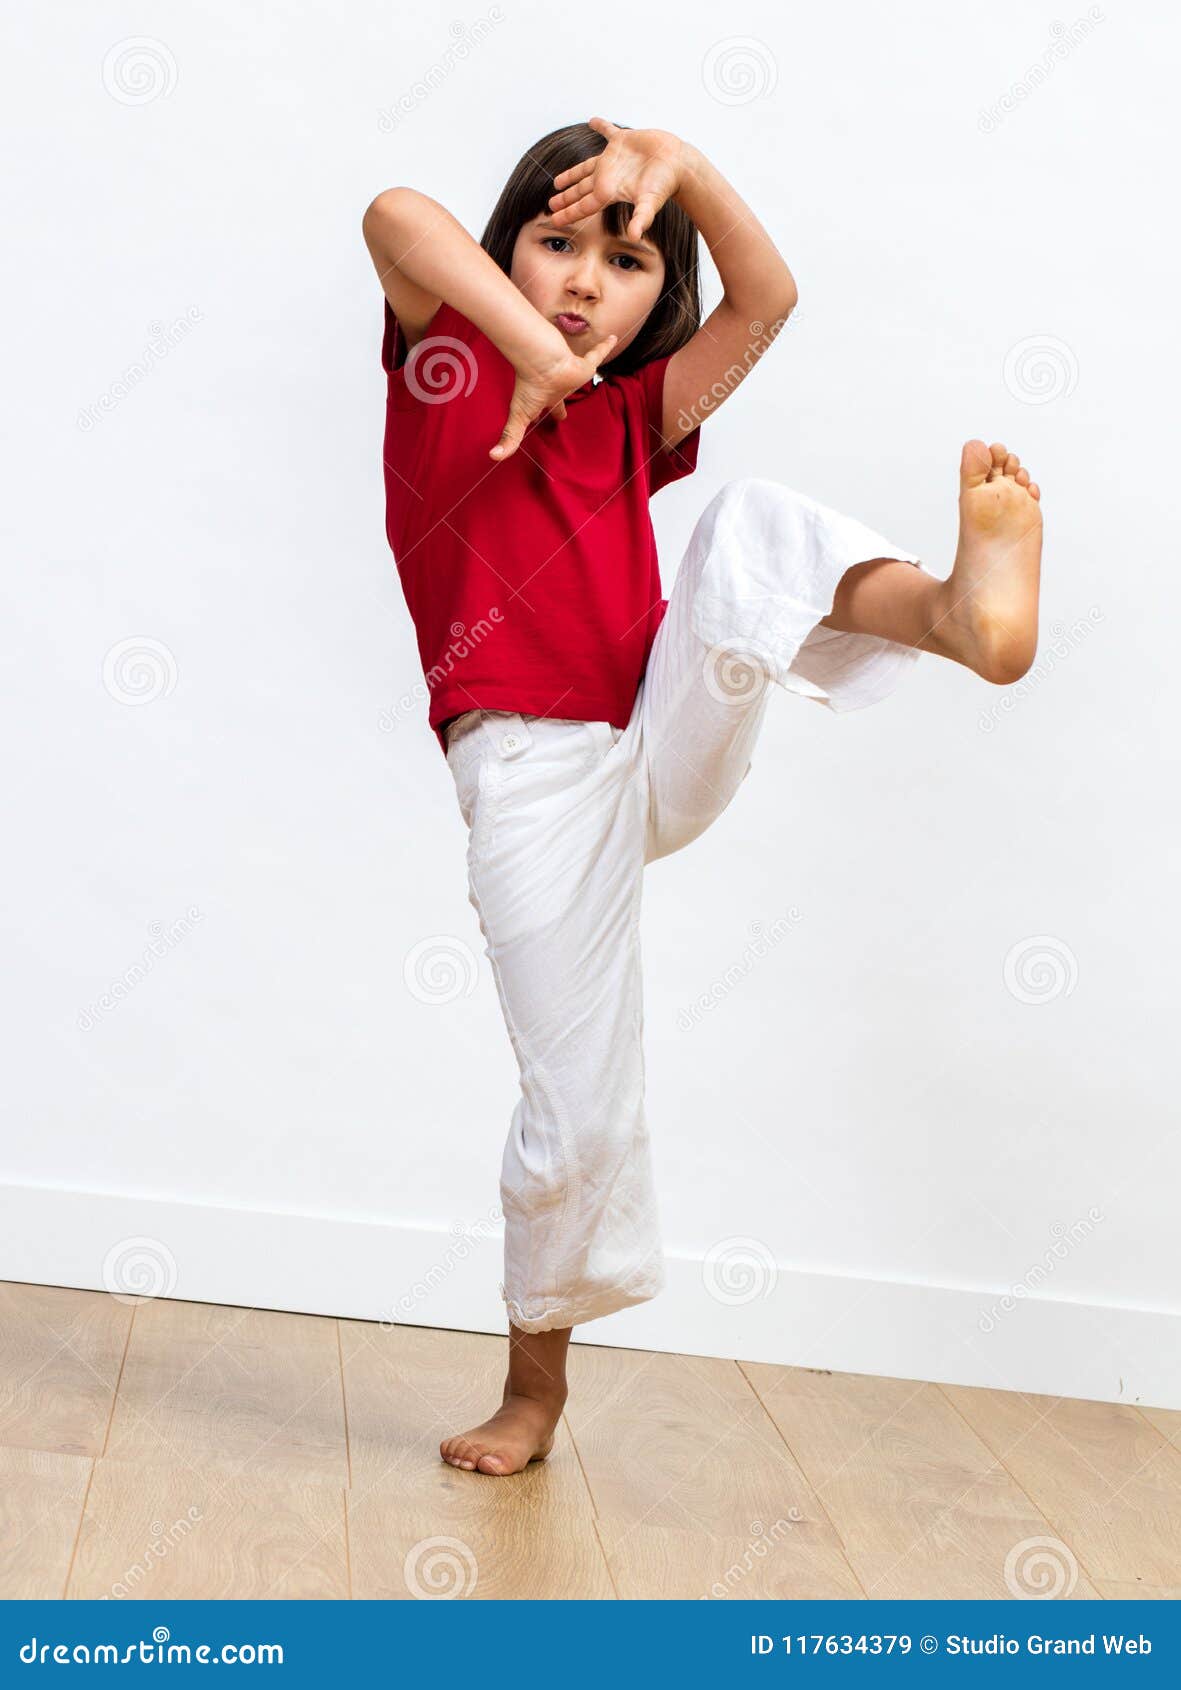 fighting child raising feet and playing hands to practise taekwondo